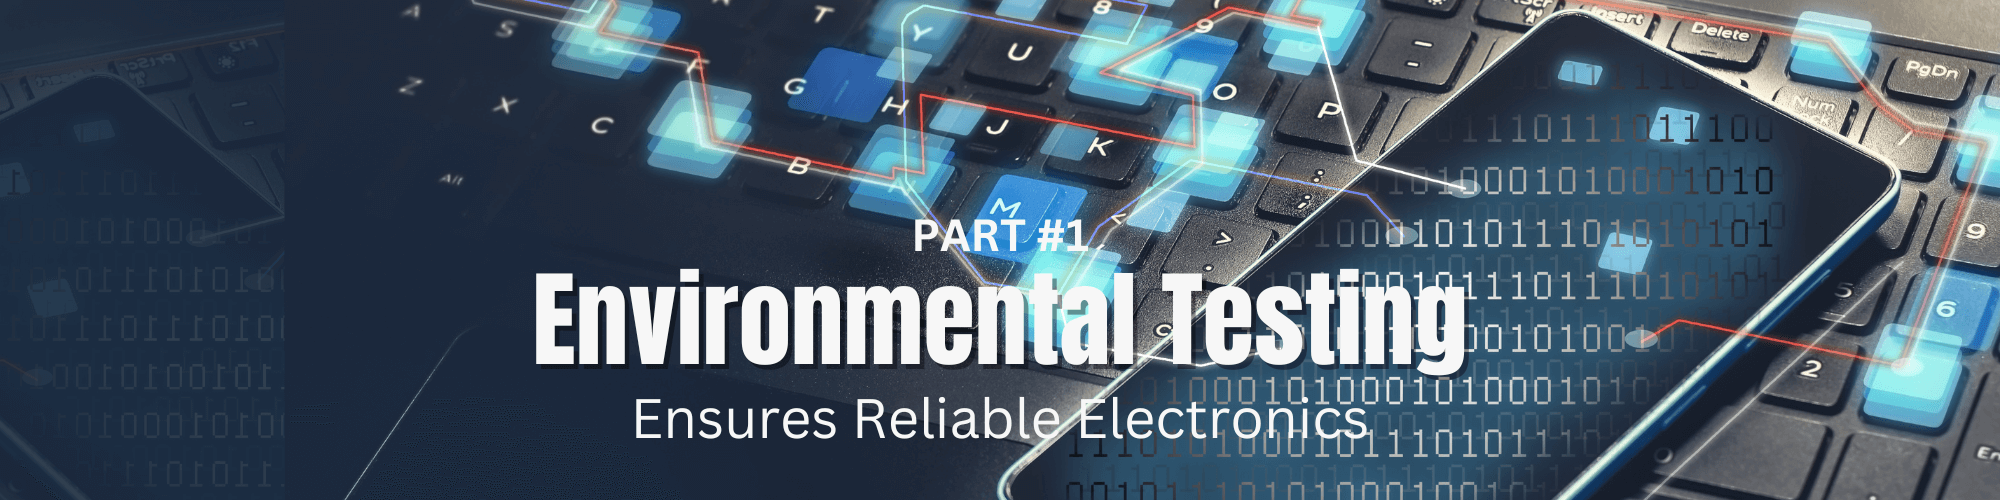 P1_Environmental_Testing _Ensures_Reliable_Electronics